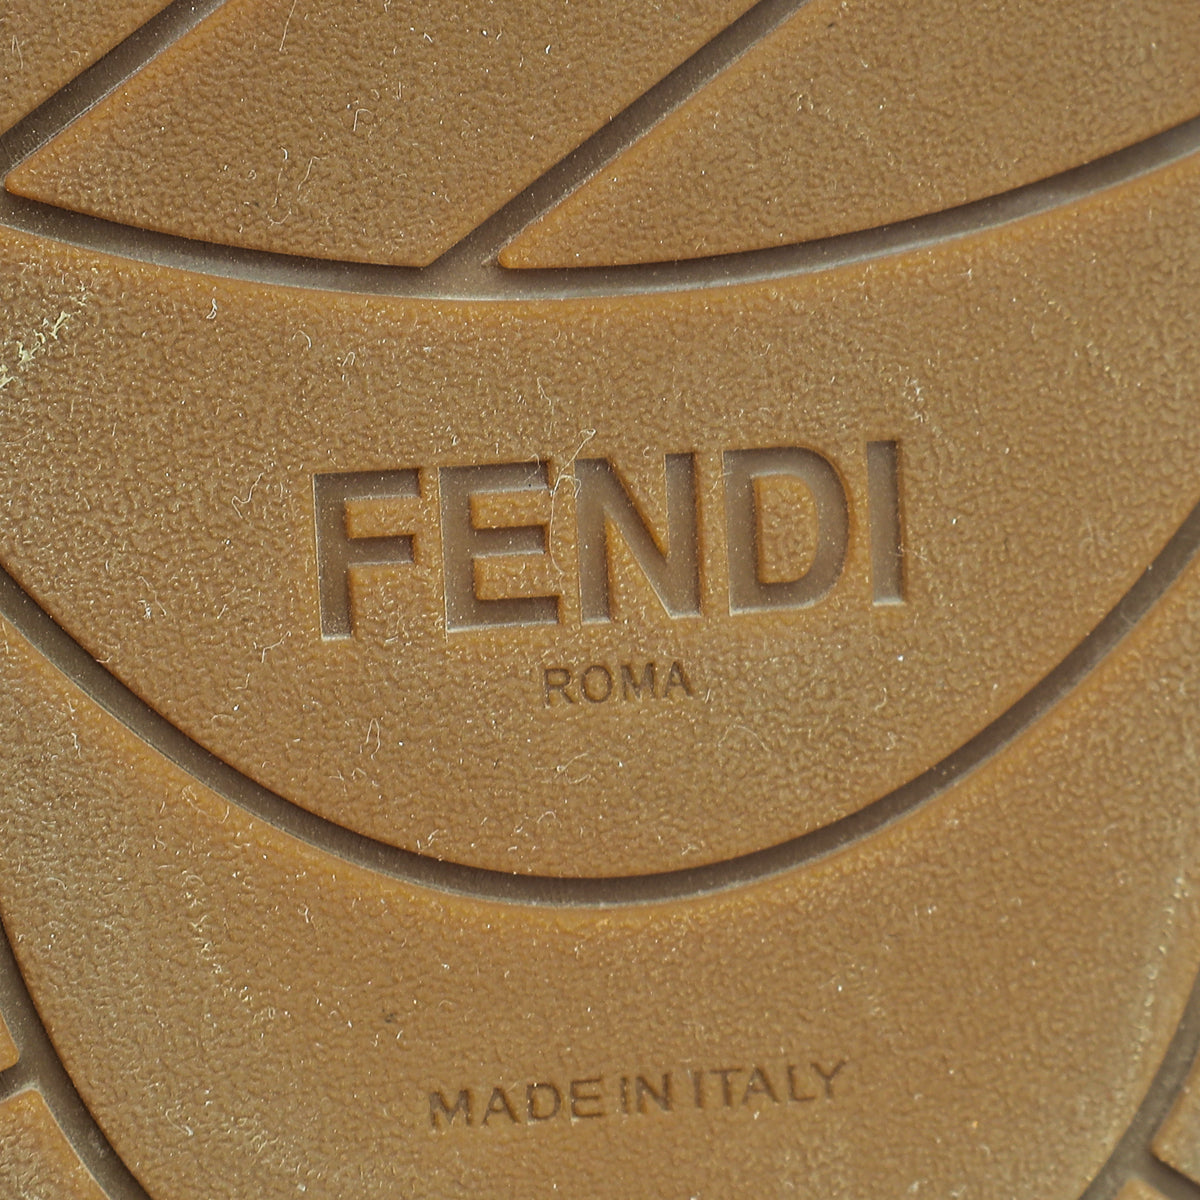 Fendi Tricolor Match Low Top Sneakers 9